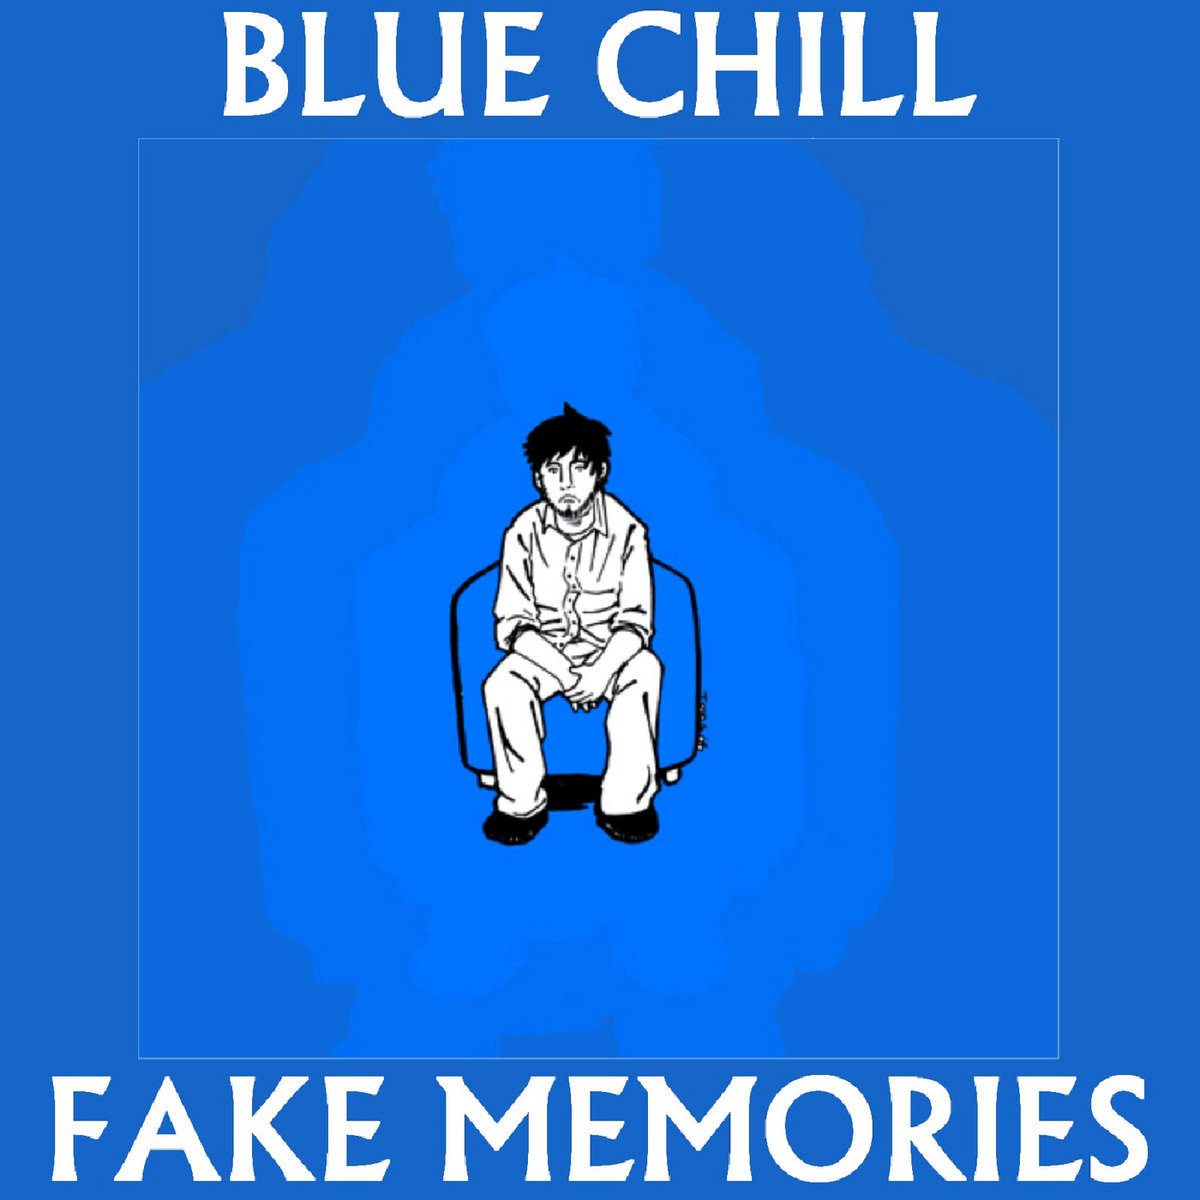 Blue chill. Original fake my mems.